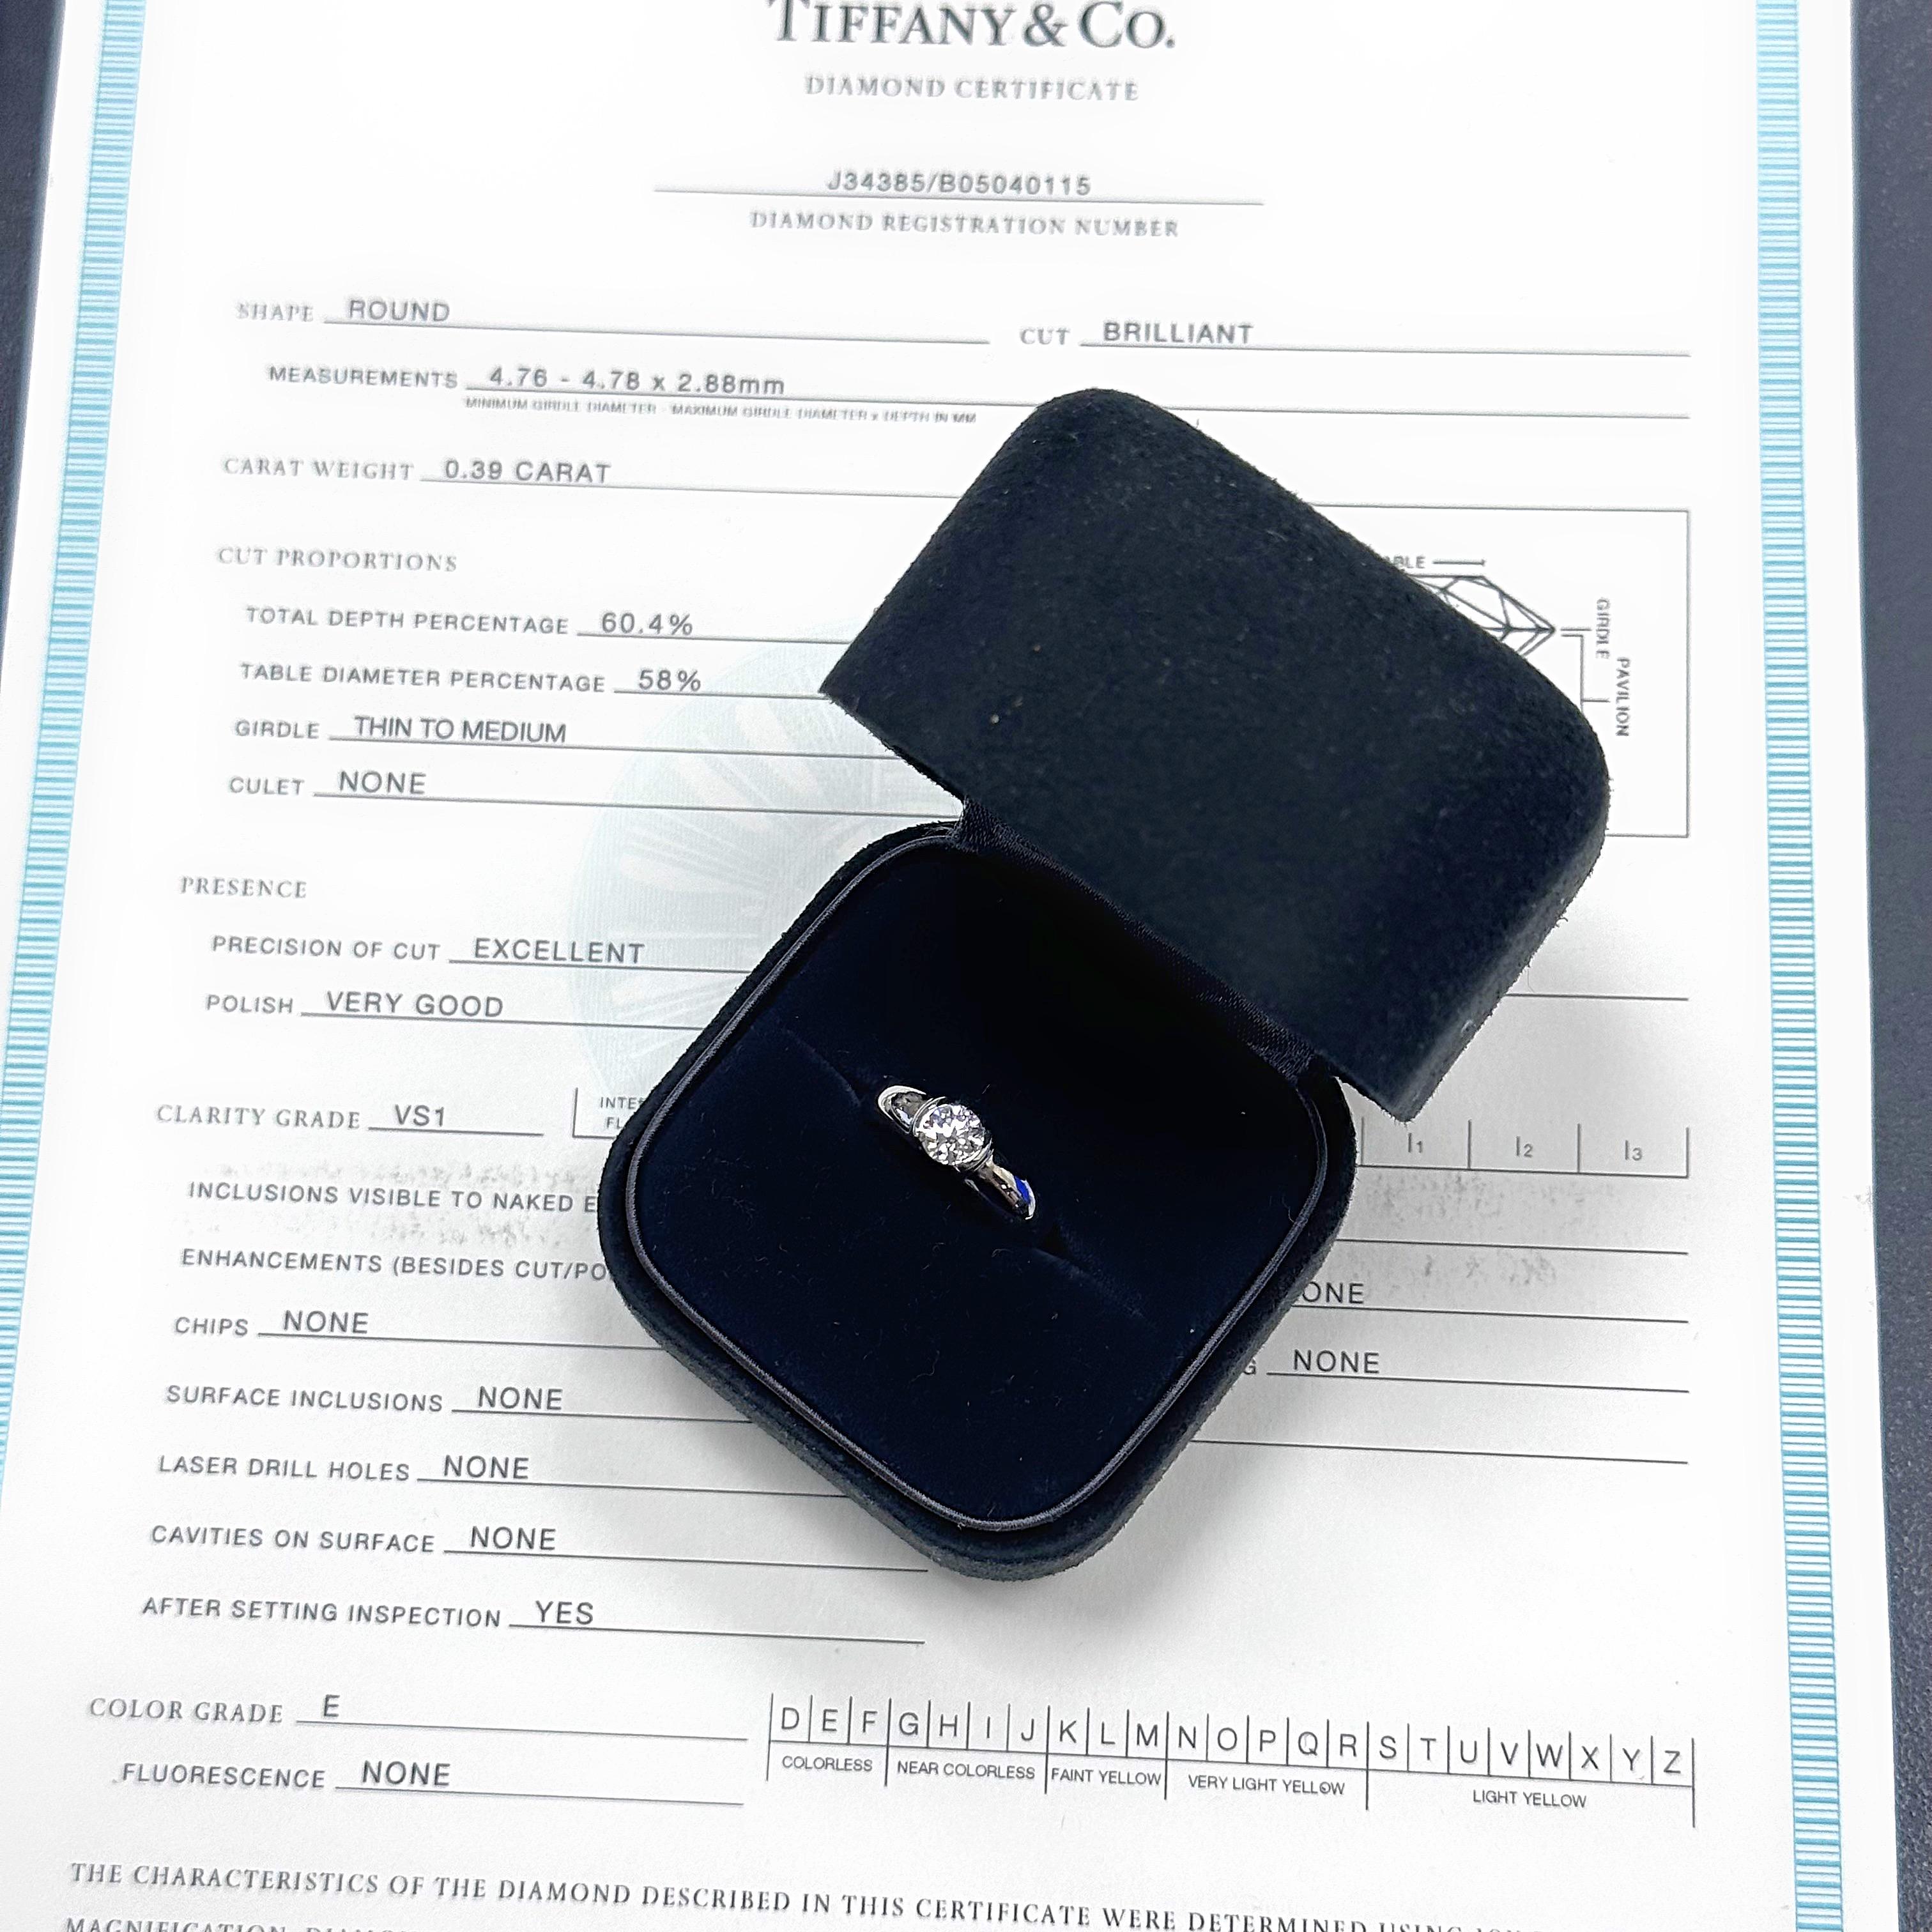 Tiffany & Co. Etoile Diamond Solitaire Engagement Ring
Style: ETOILE
Ref. number: J34385 / B05040115
Metal: PT950 Platinum
Size: 3.25
TCW: 0.39 cts
Main Diamond: Round Brilliant Diamond
Color & Clarity: E, VS1
Hallmark: ©TIFFANY&Co. PT950 J34385 .39